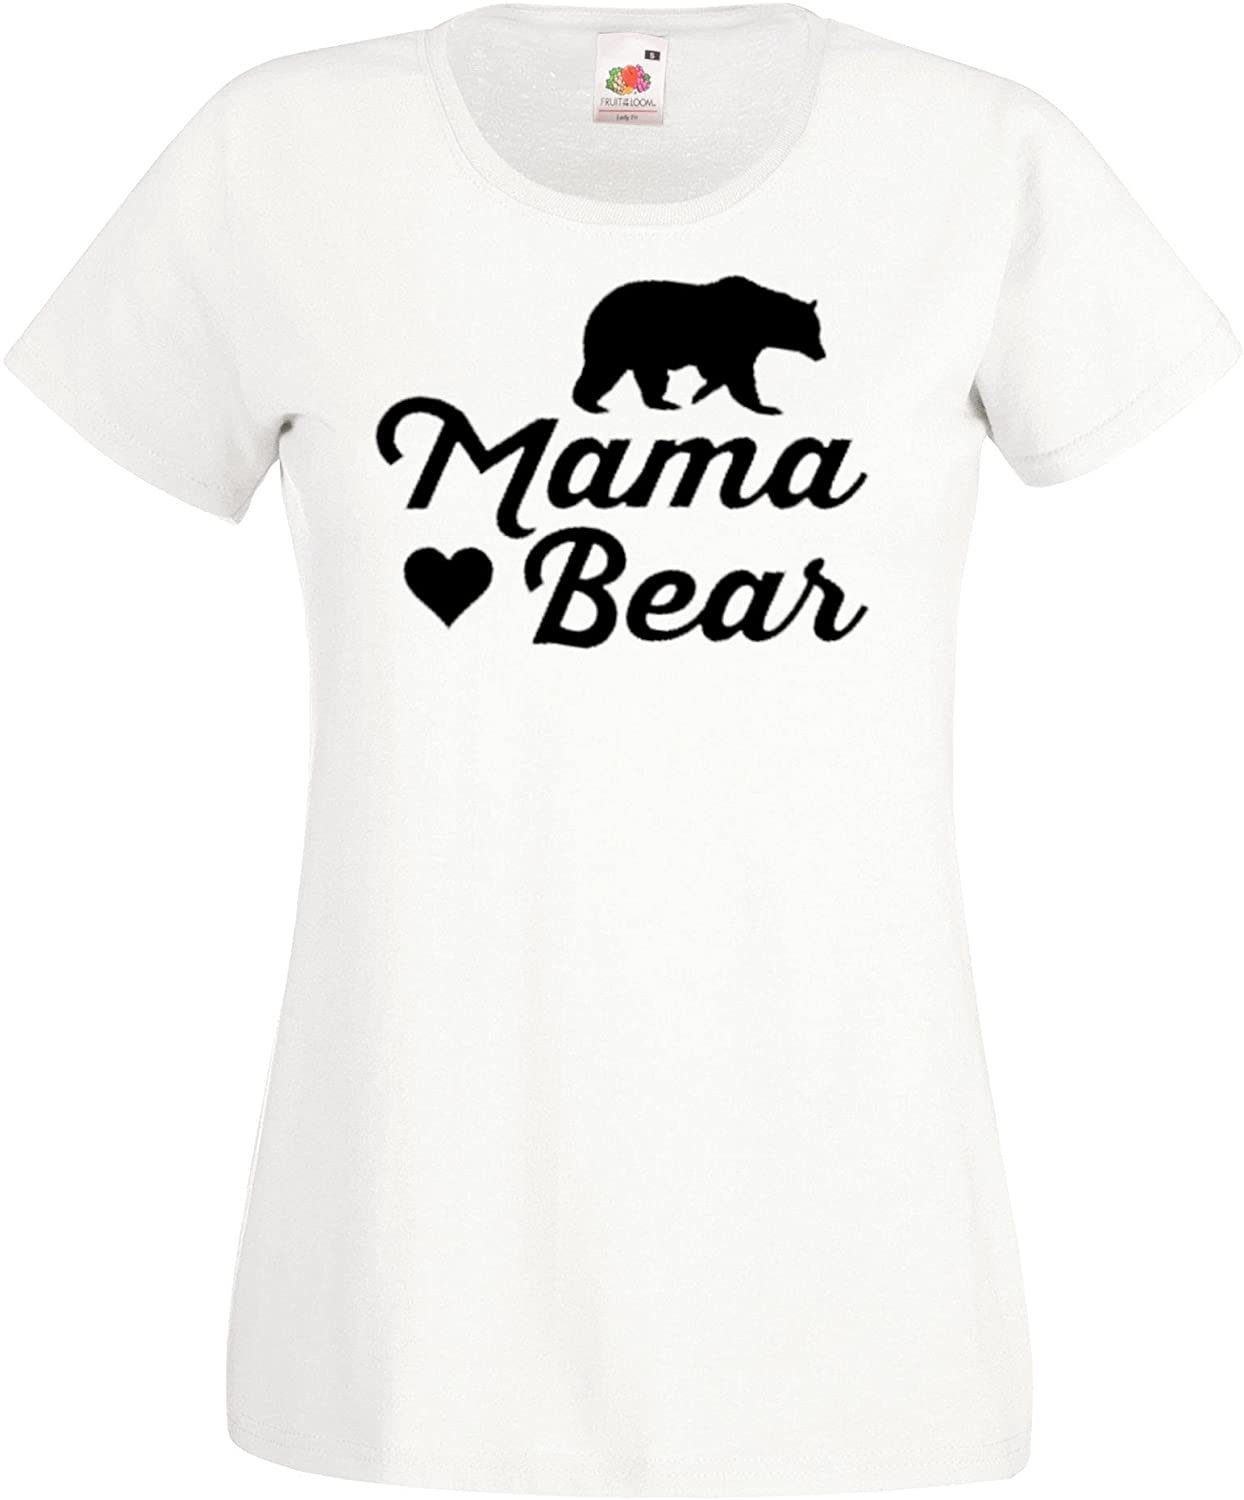 tollem Designz Baby Youth Papa in Herren Strampler Bear / Weiß Design, Mama Mama Damen Bear Strampler Baby mit T-Shirt Set Frontprint